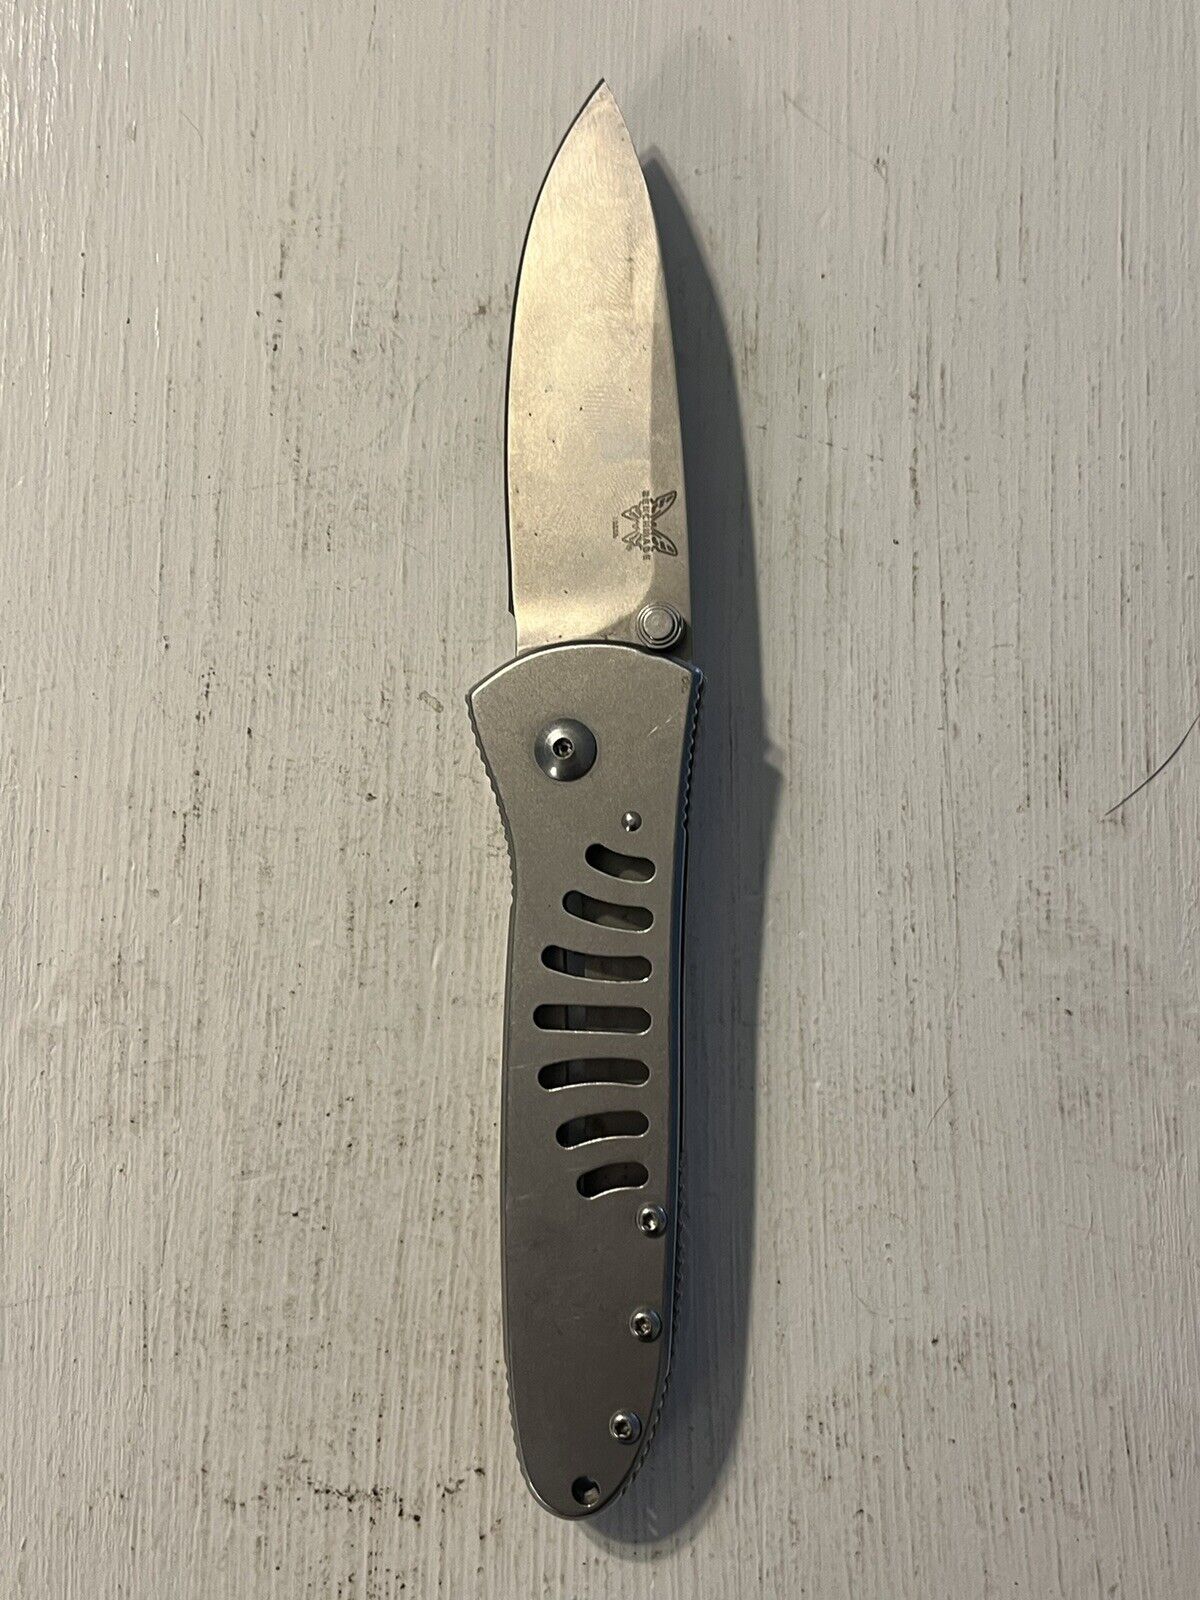 DISCONTINUED BENCHMADE MONO CHROME 10300 FRAME LOCK  FOLDING POCKET KNIFE